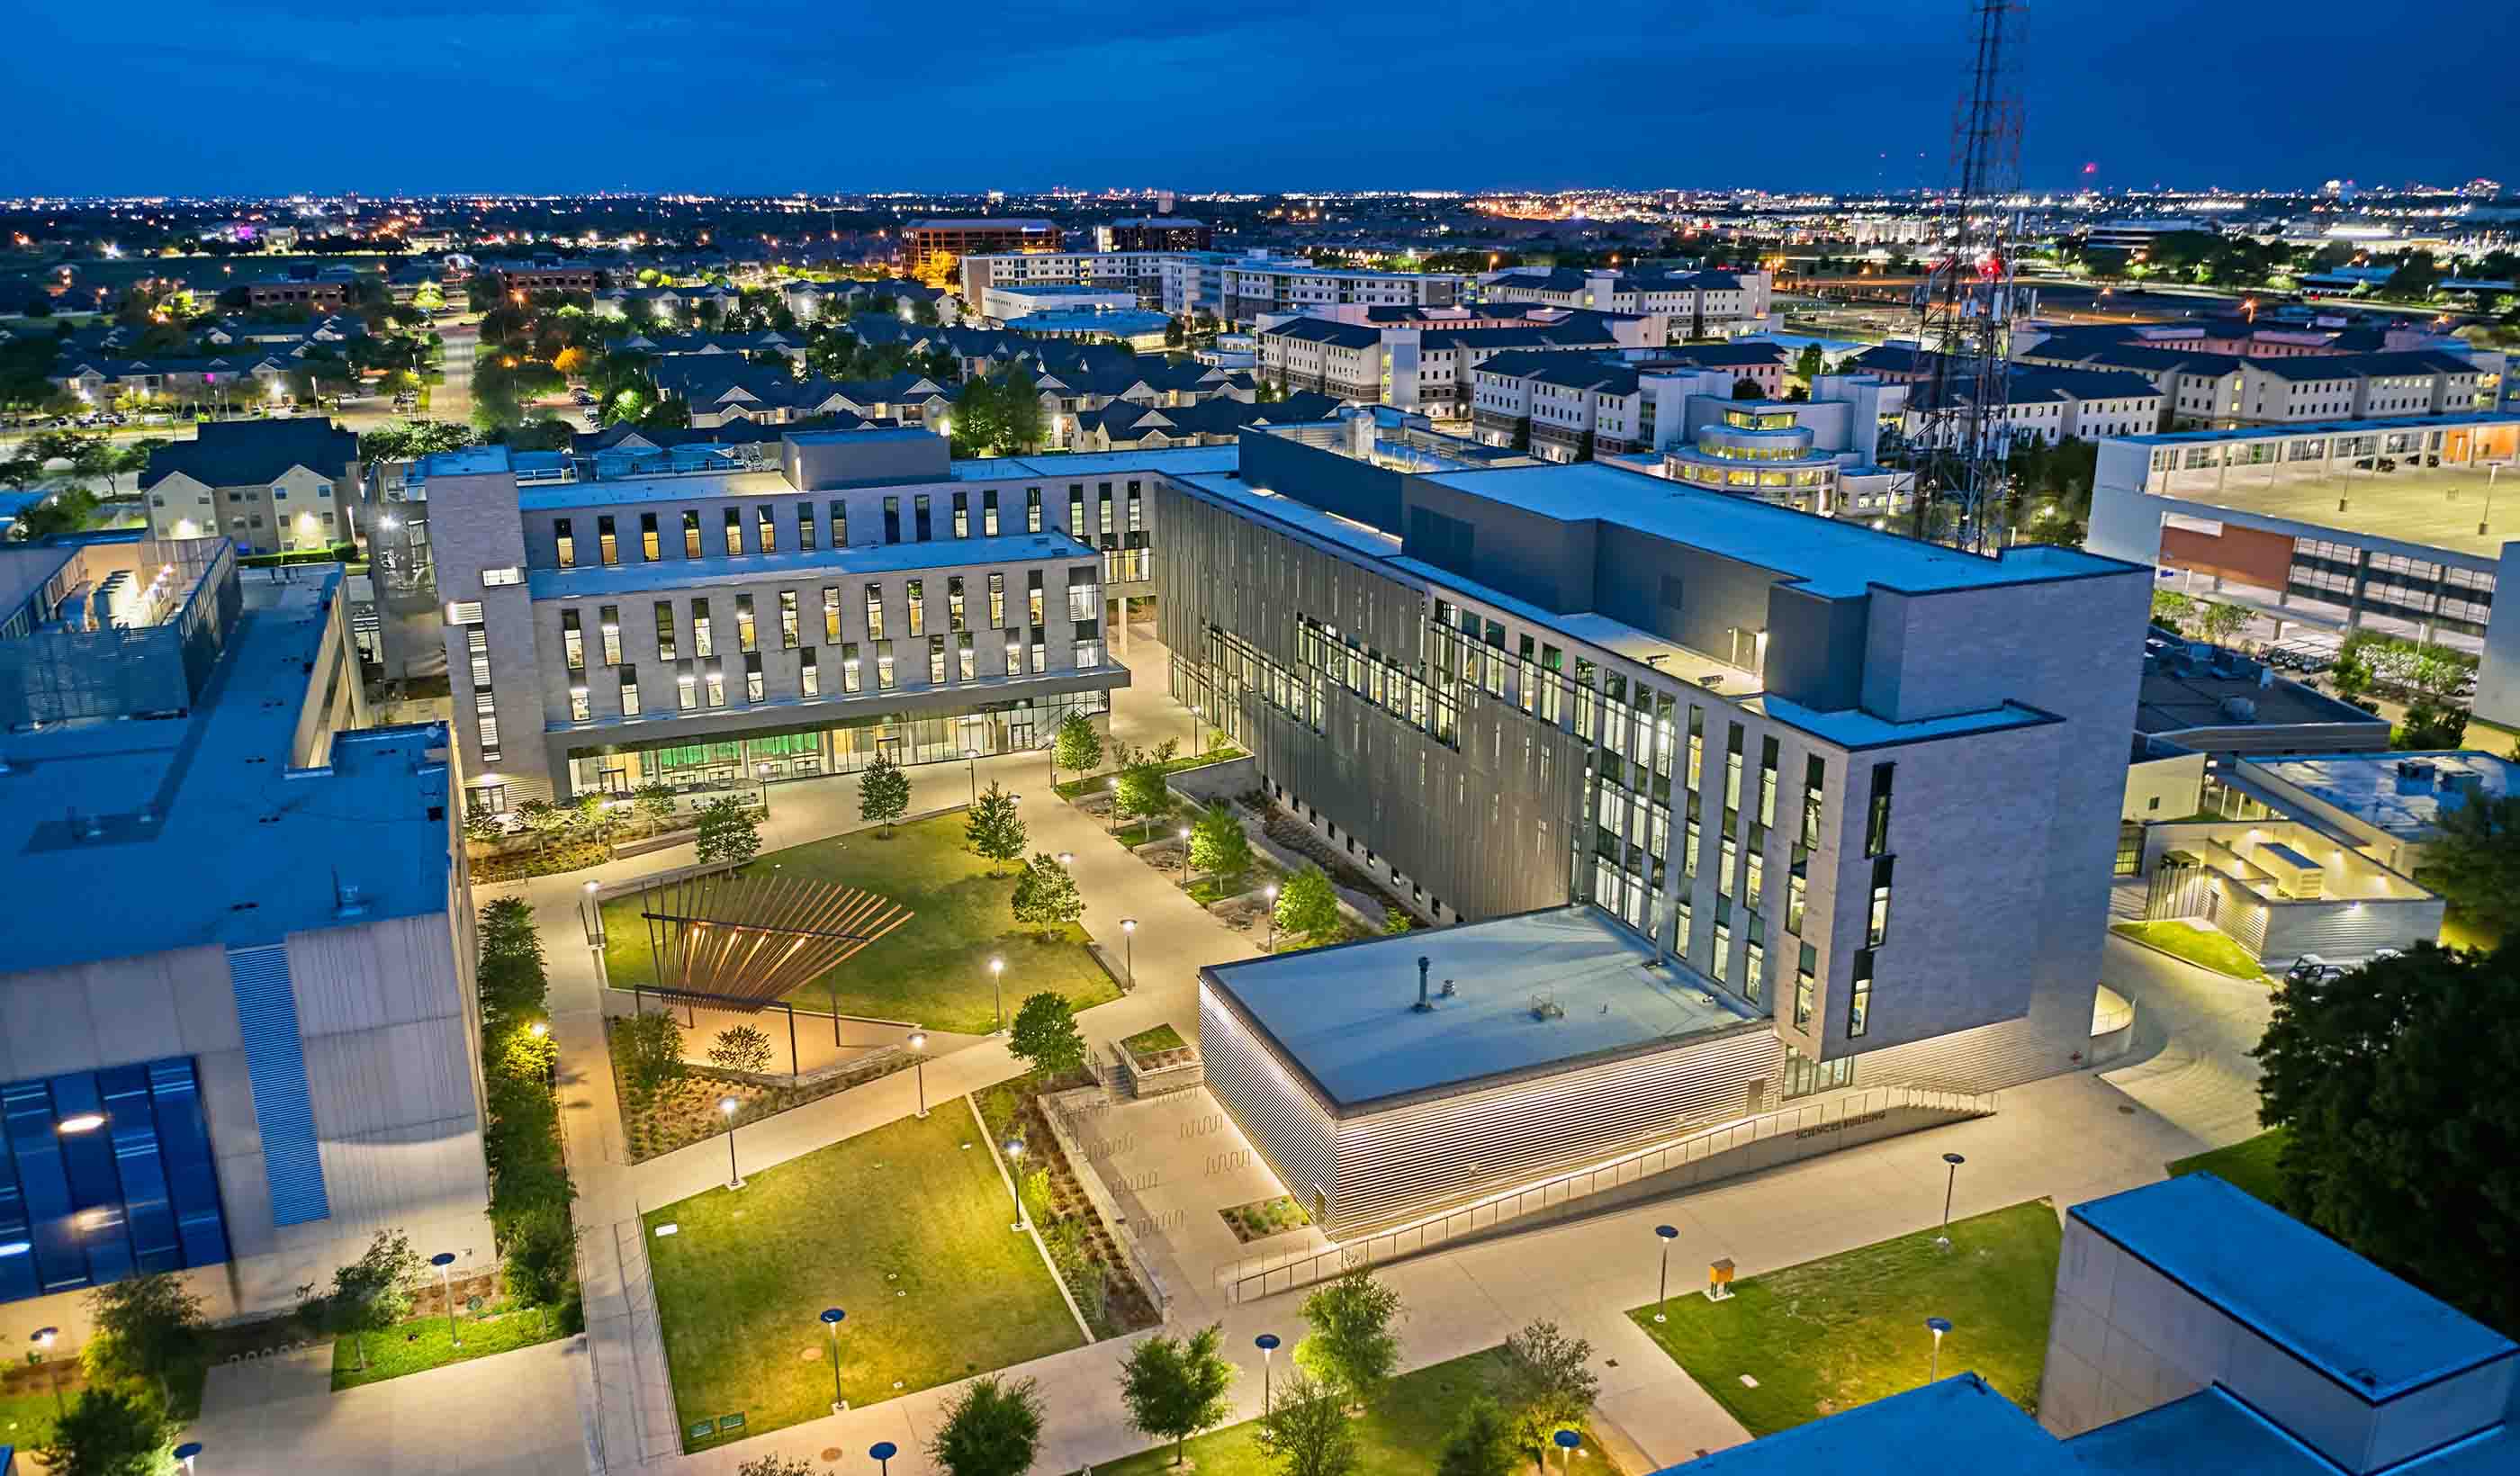 The University of Texas at Dallas Sciences Building